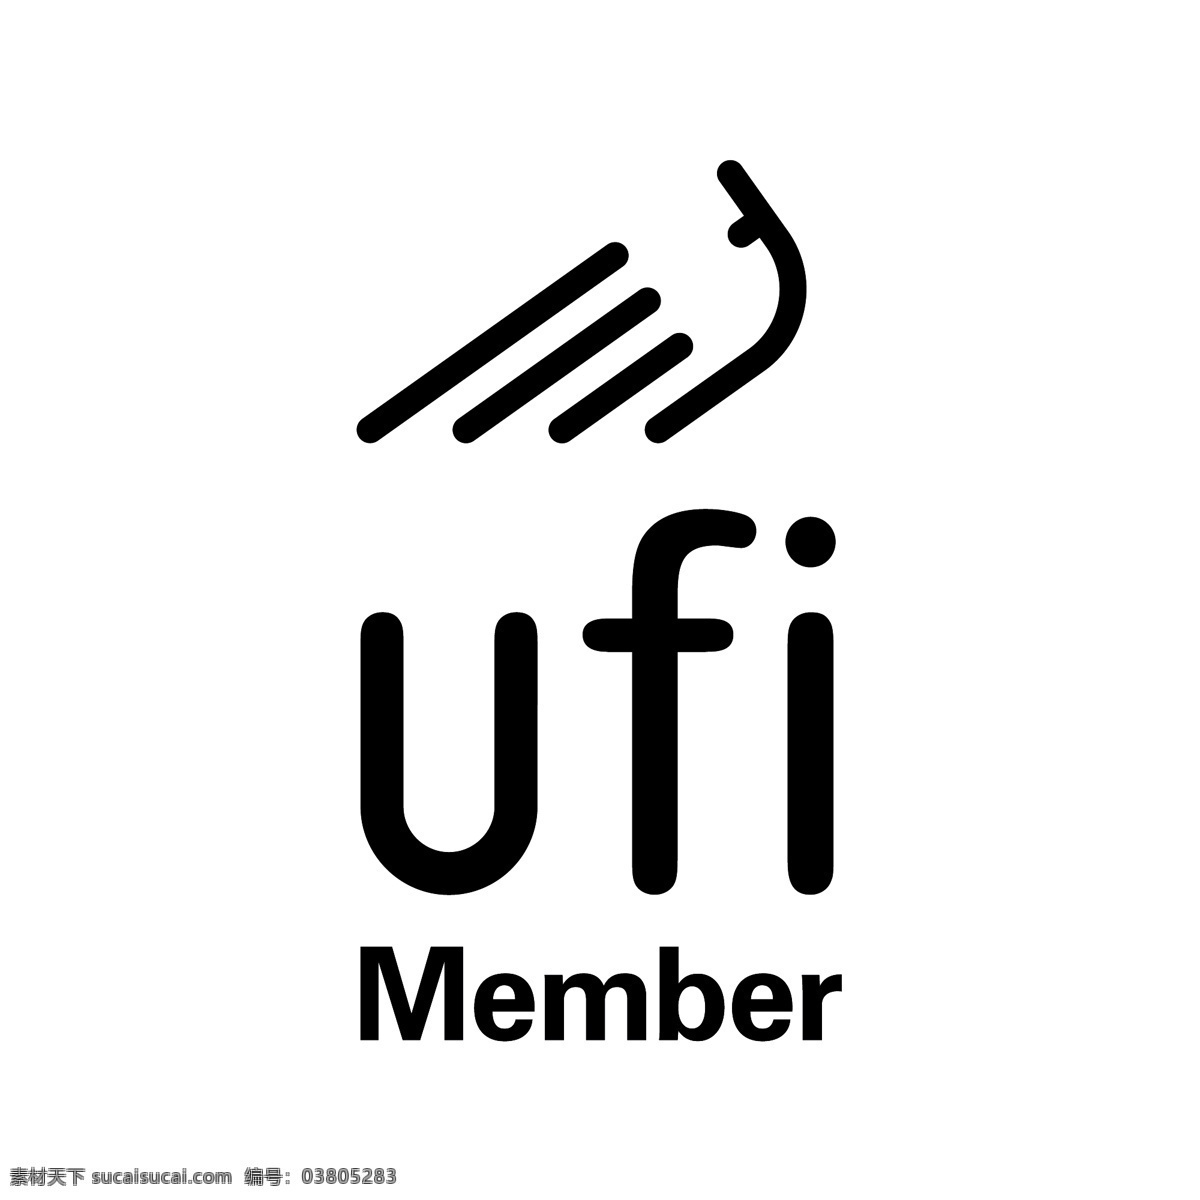 ufi成员0 ufi ufi成员 矢量 会员 会员的向量 向量 成员 成员向量 向量成员国旗 会员注册 白色